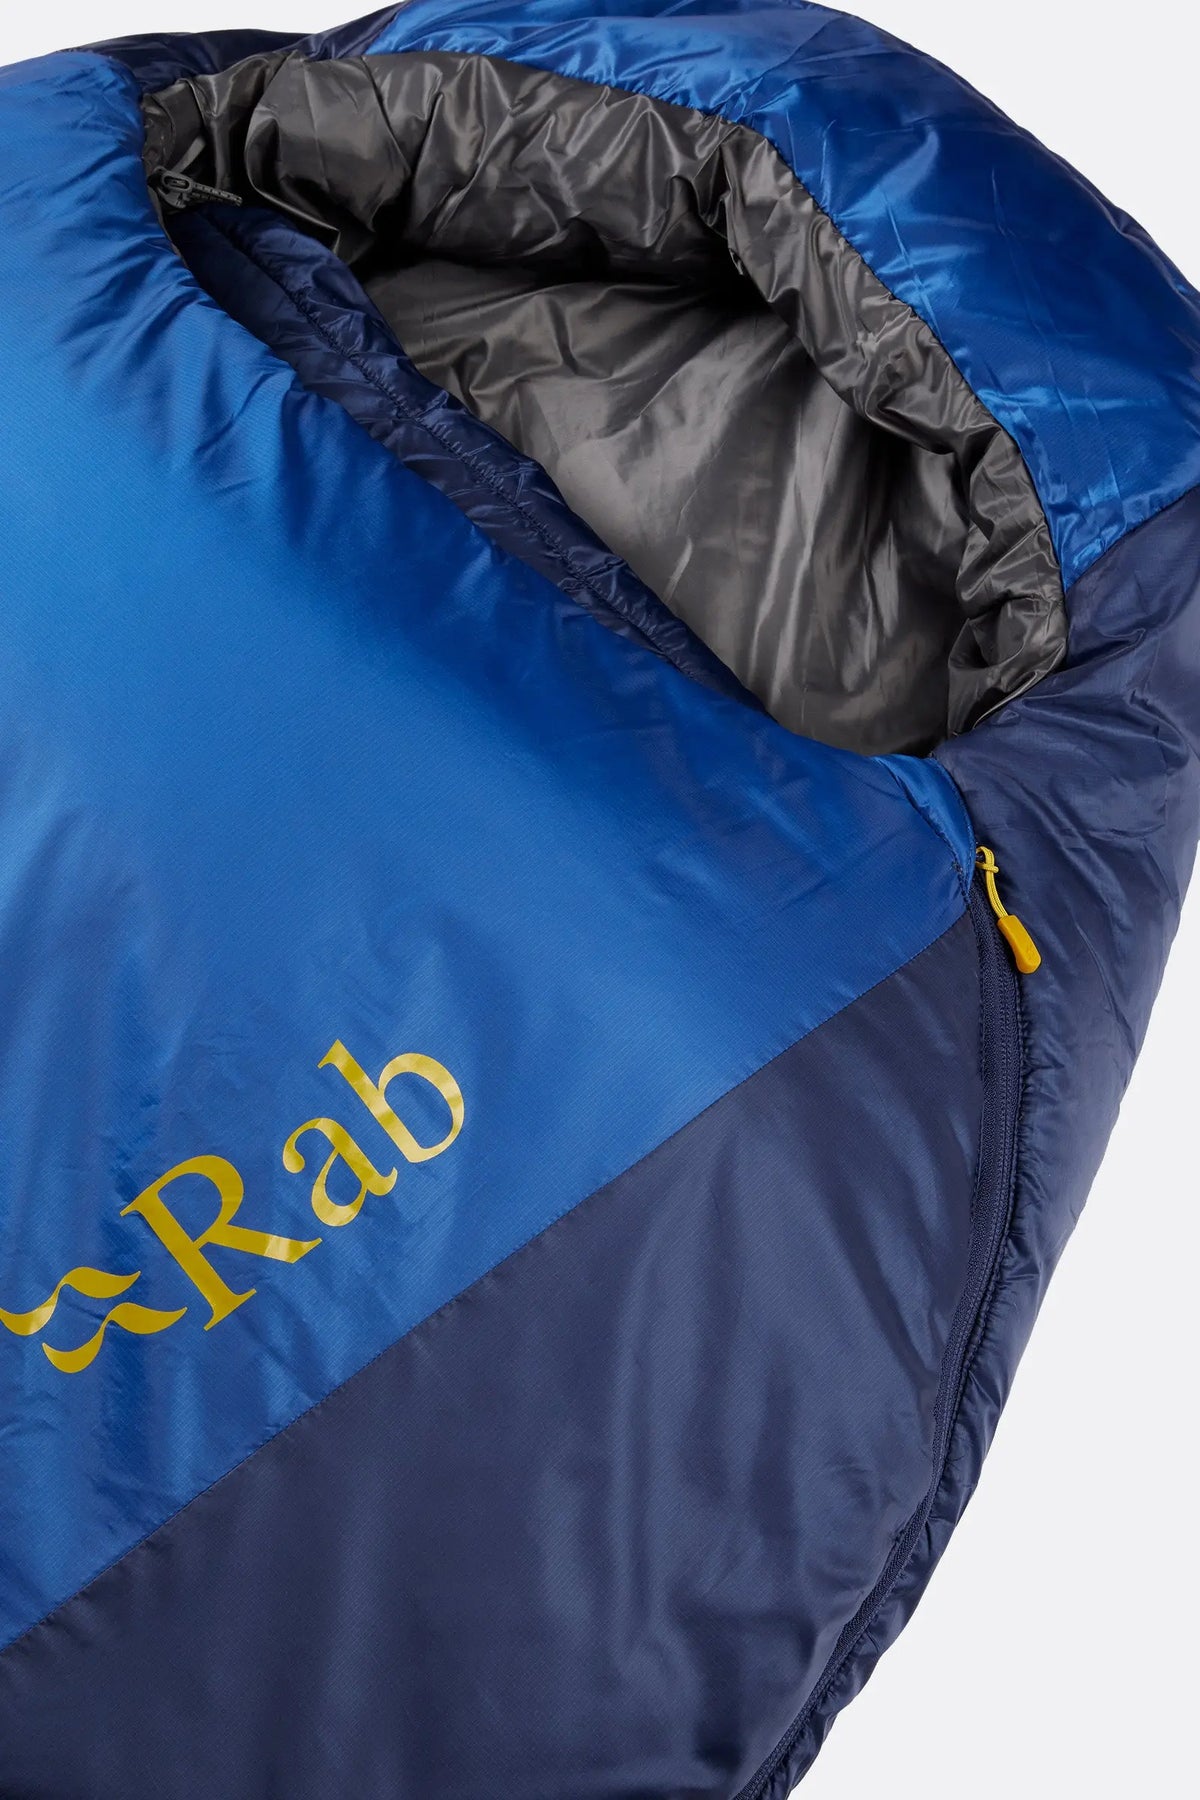 Rab Solar Eco 2 Sleeping Bag (-2C)